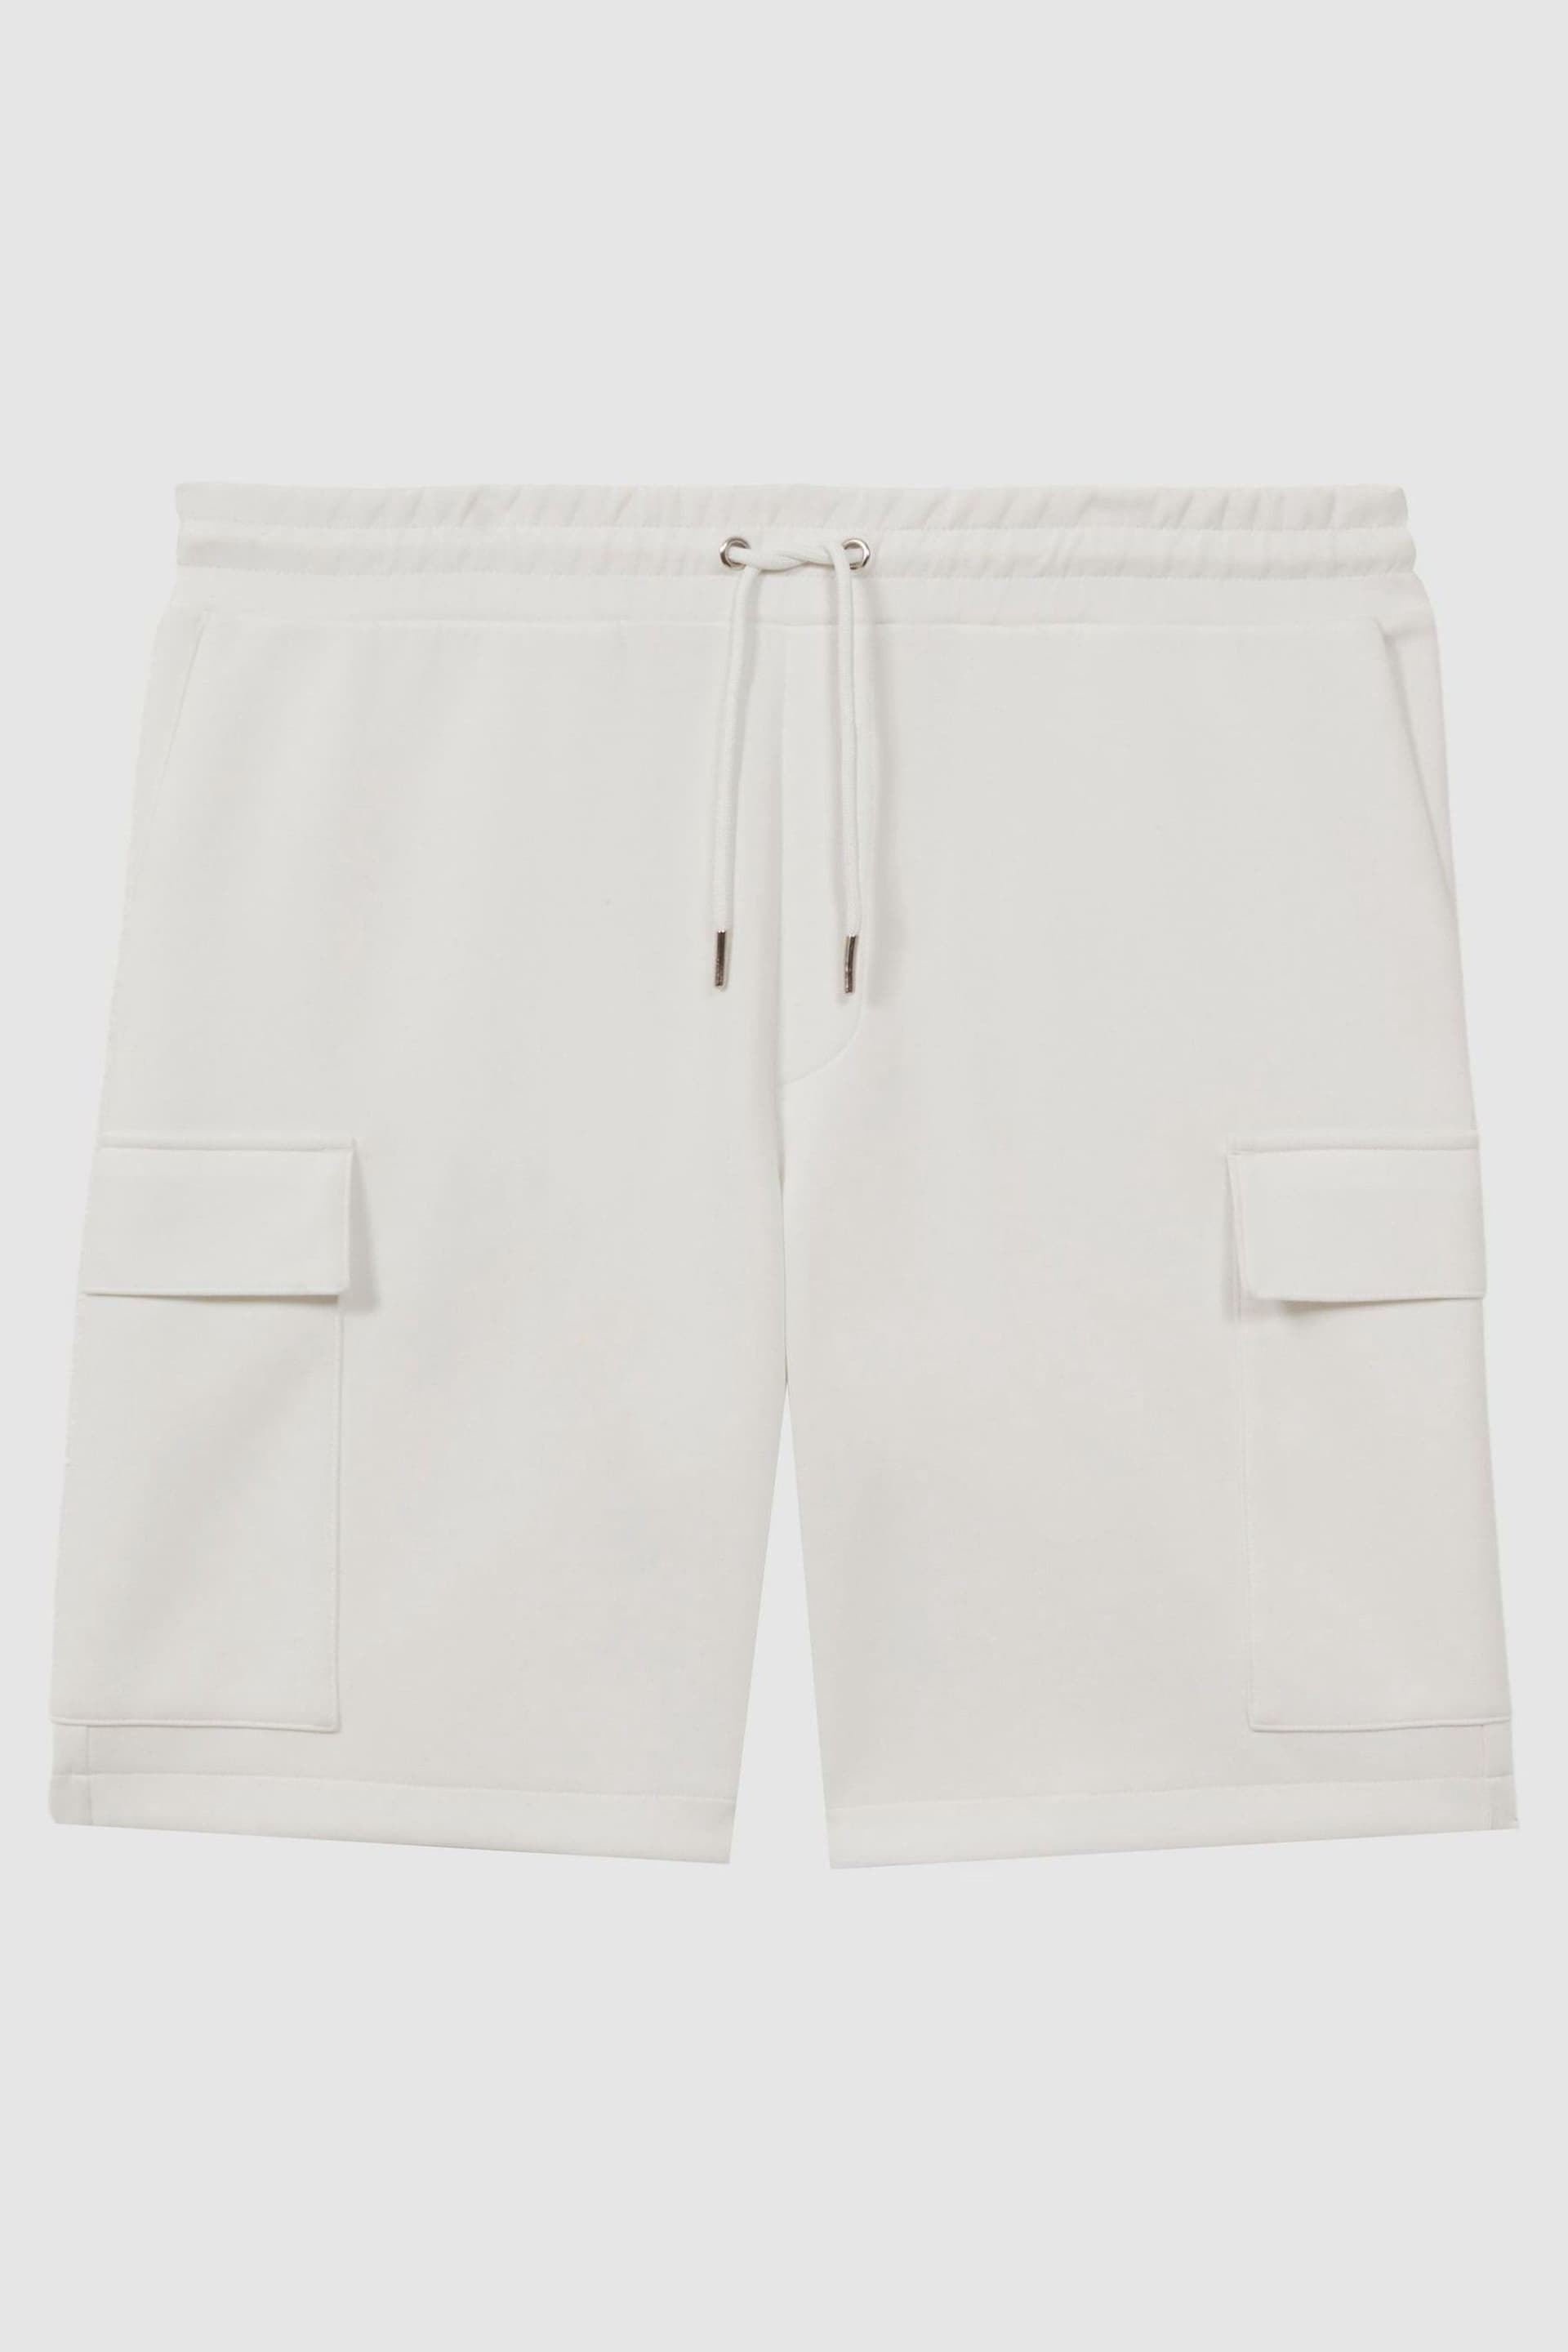 Reiss White Oliver Interlock Jersey Cargo Shorts - Image 2 of 4